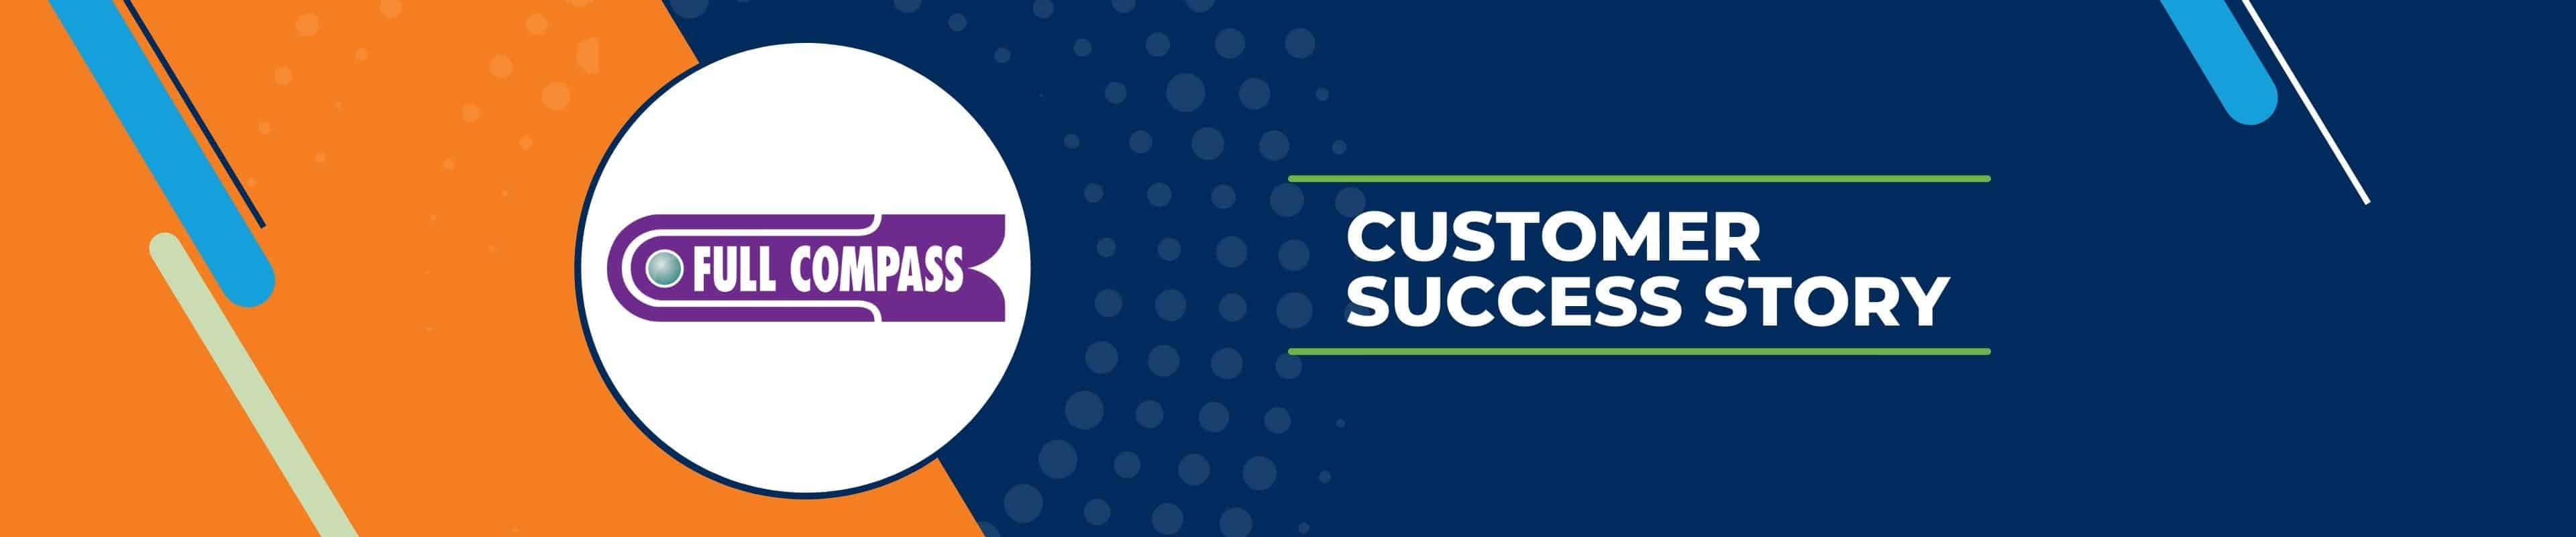 Full Compass: Customer Success Story